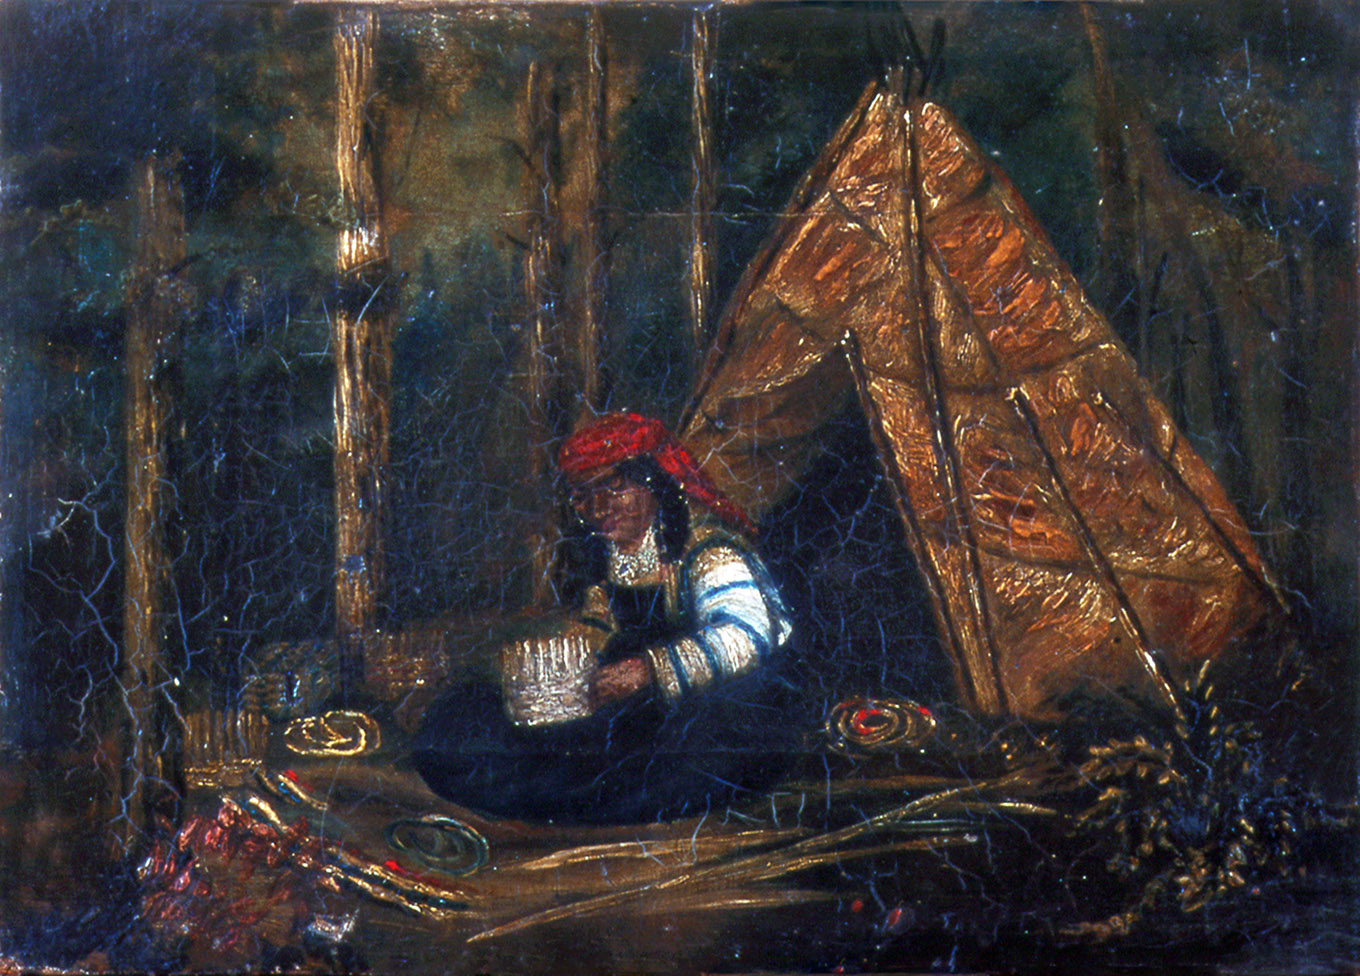 Mi'kmaq woman making basket